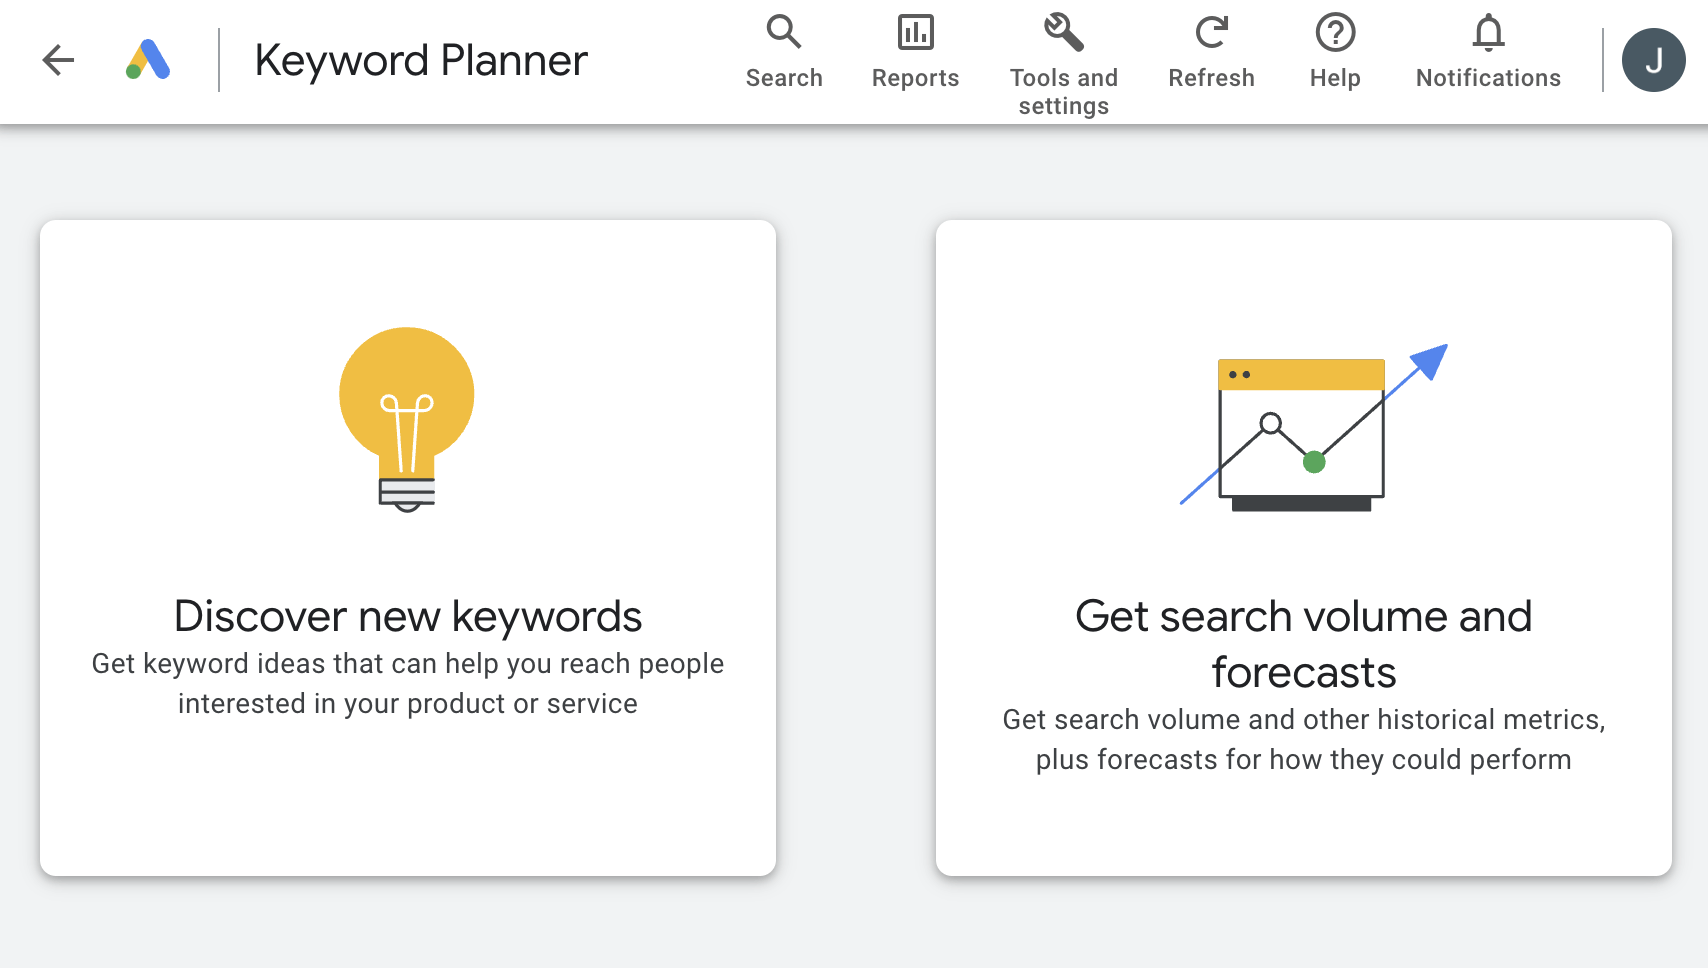 ابزار Google Keyword Planner